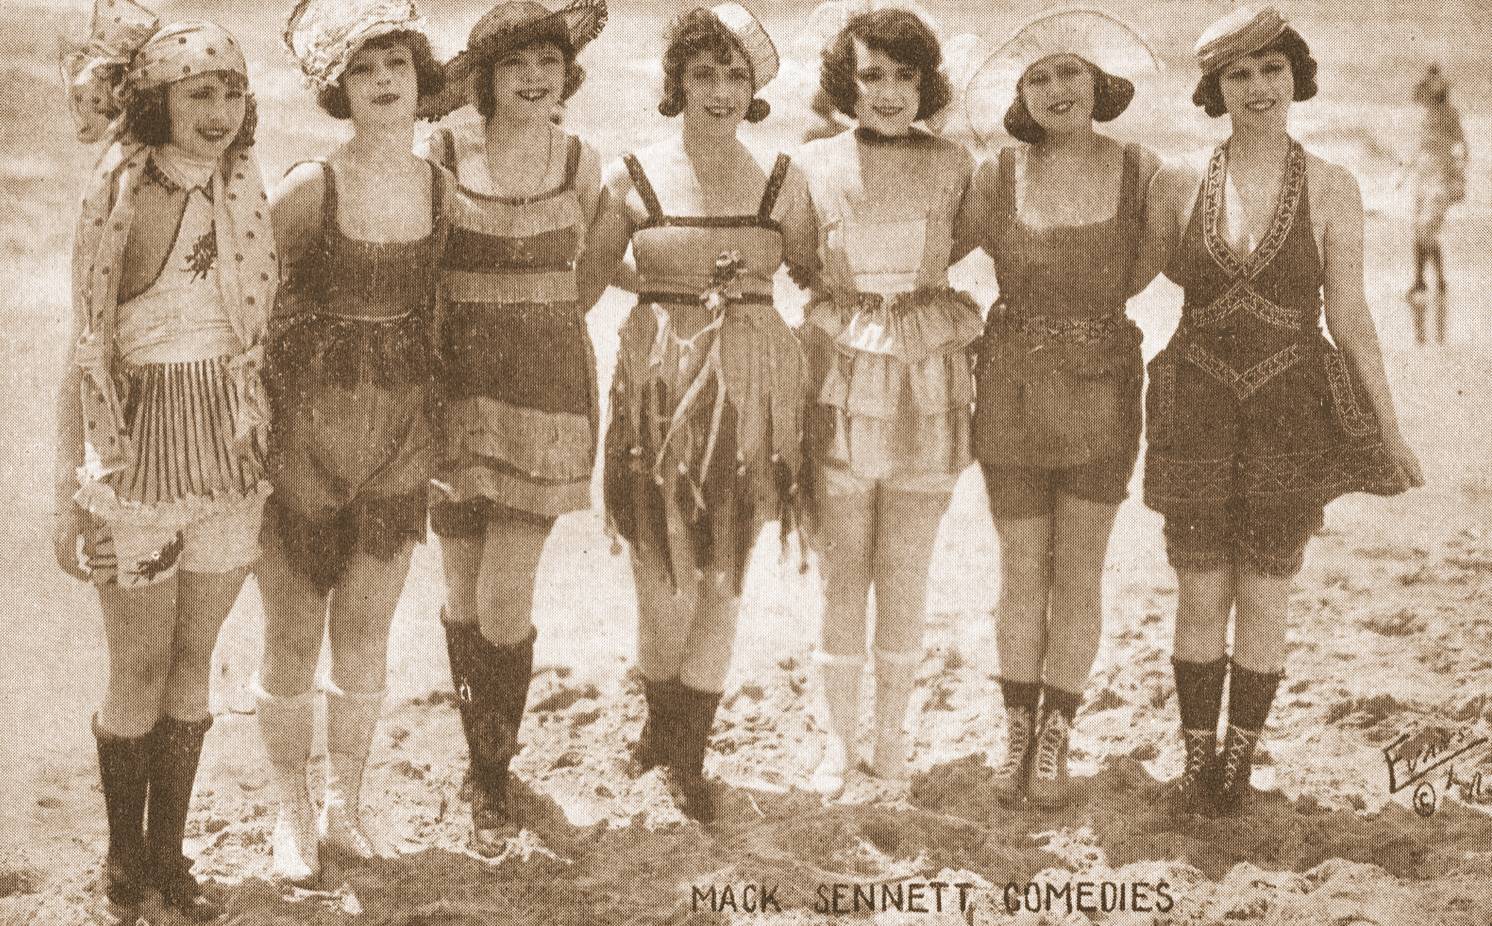 arcade-card-mack-sennett-comedies-7-women-in-bathing-suits-on-beach.jpg